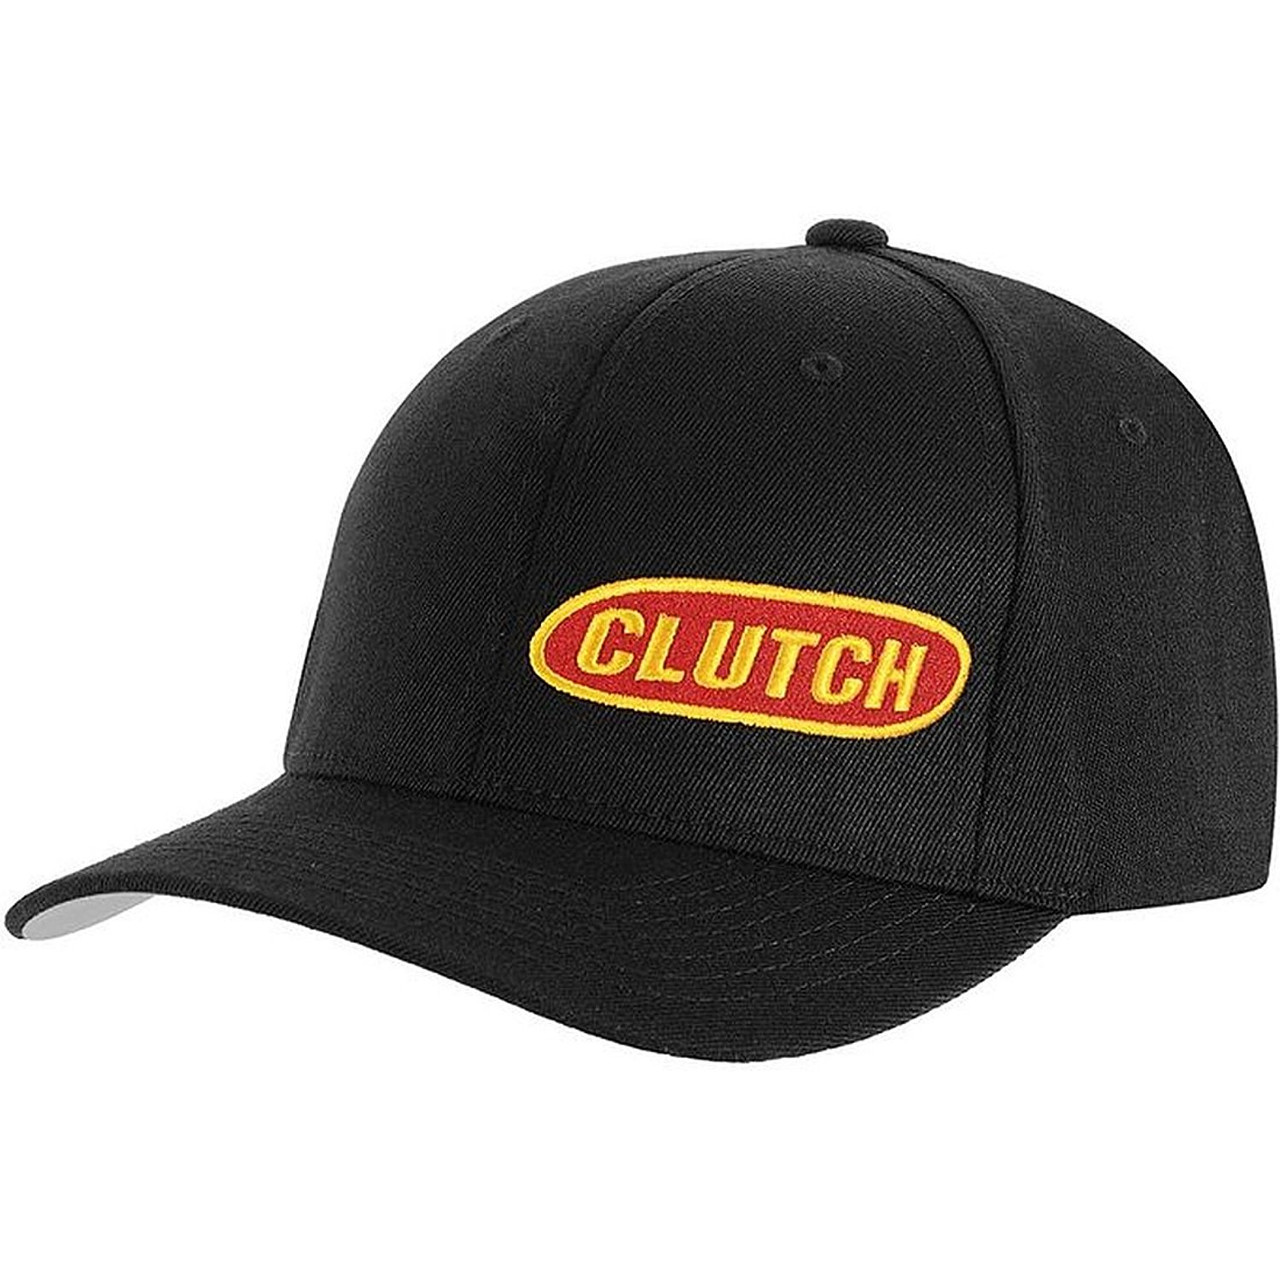 CLUTCH Oval Logo Badge Flexfit Fitted Hat - Merch2rock Alternative Clothing